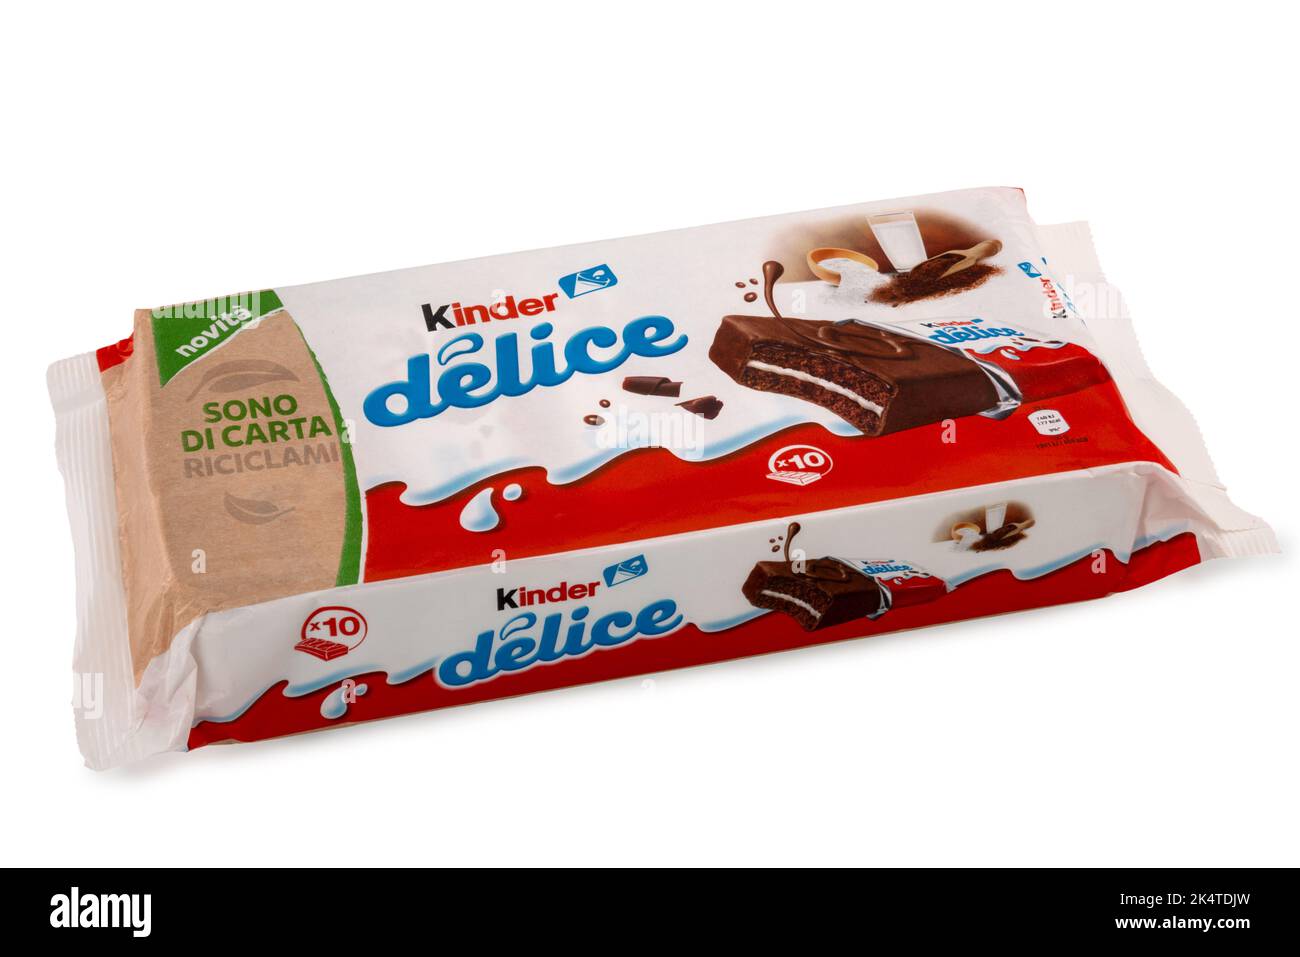 Alba, Italien - 04. Oktober 2022: Kinder Delice Ferrero italienische Konfektion, mit zehn Snacks, hergestellt aus recyceltem Papier. tex: Sono di Carta Reciclami Stockfoto